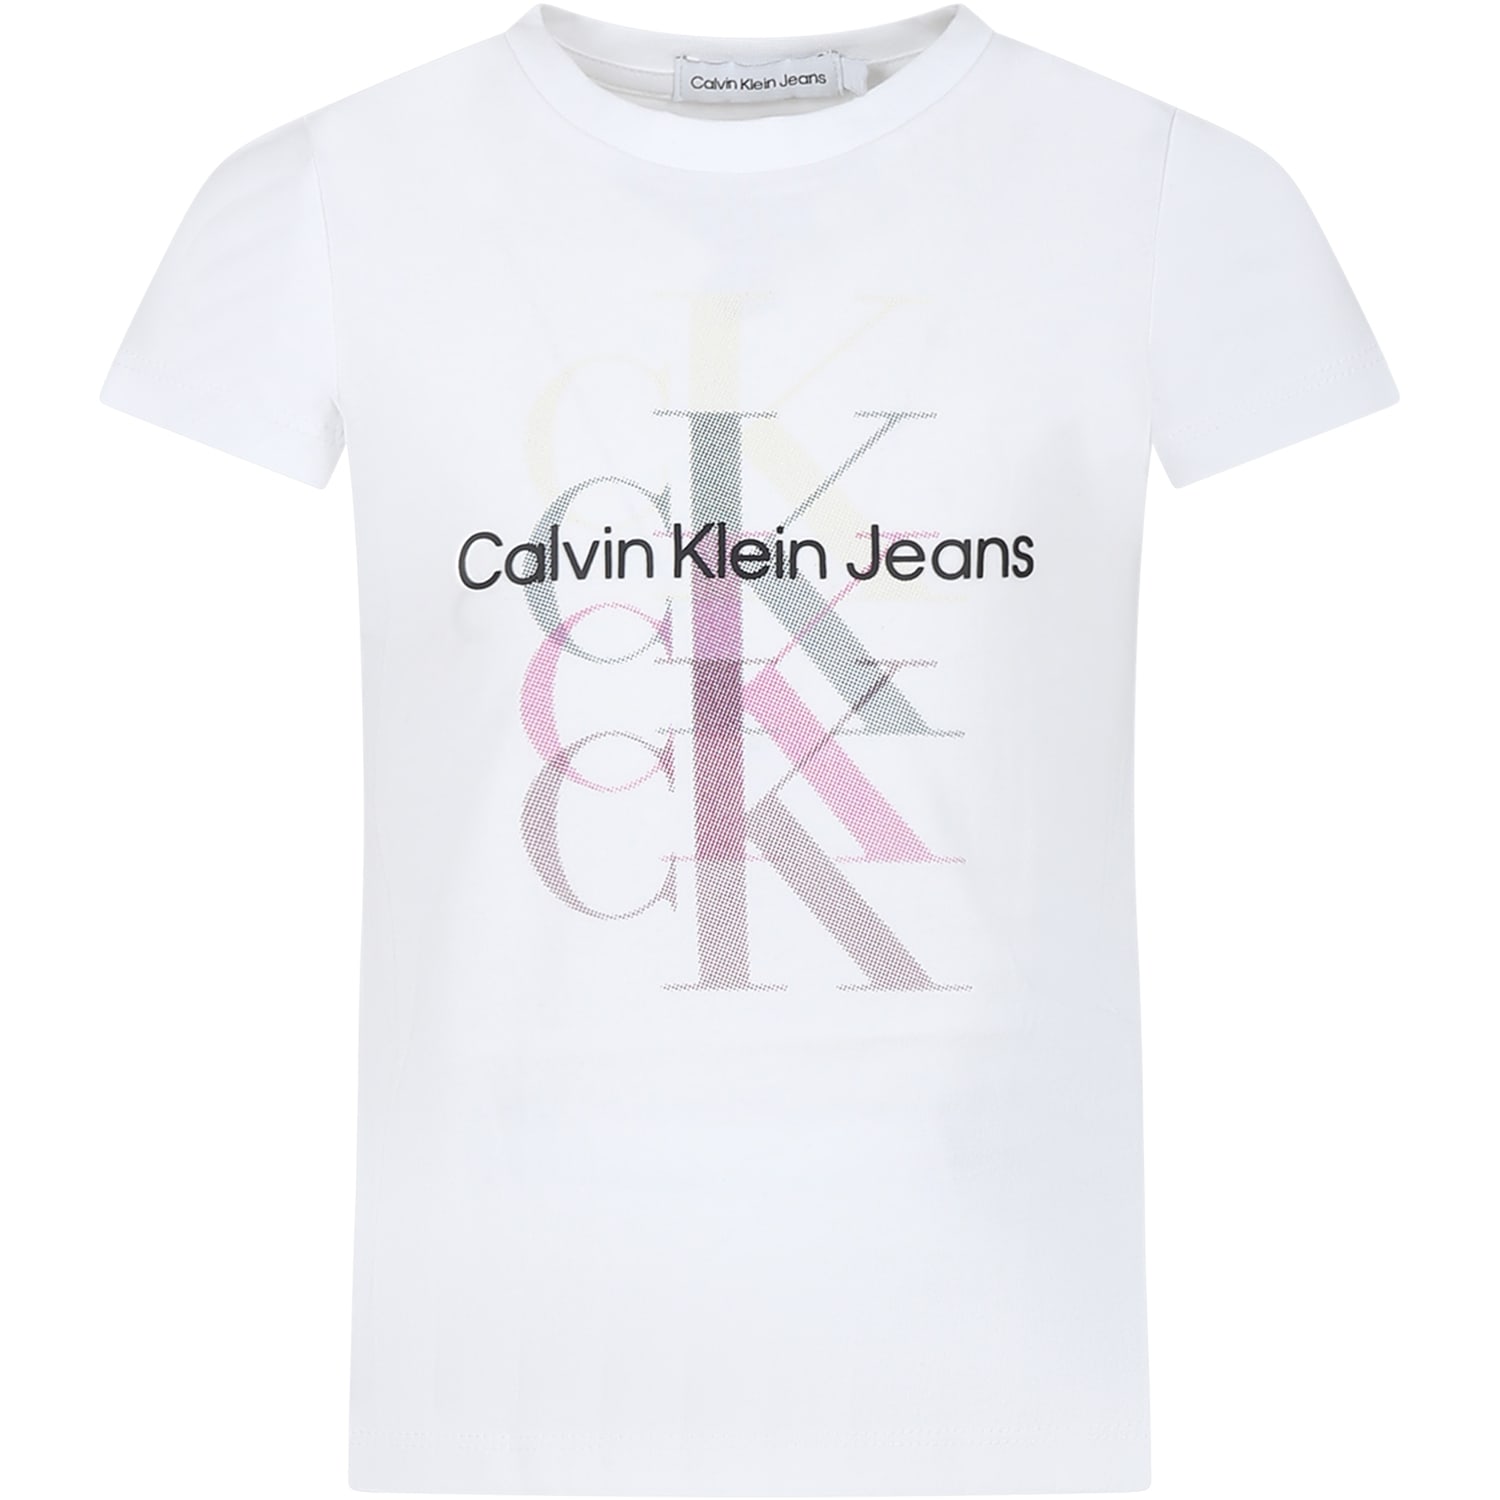 CALVIN KLEIN WHITE T-SHIRT FOR GIRL WITH LOGO